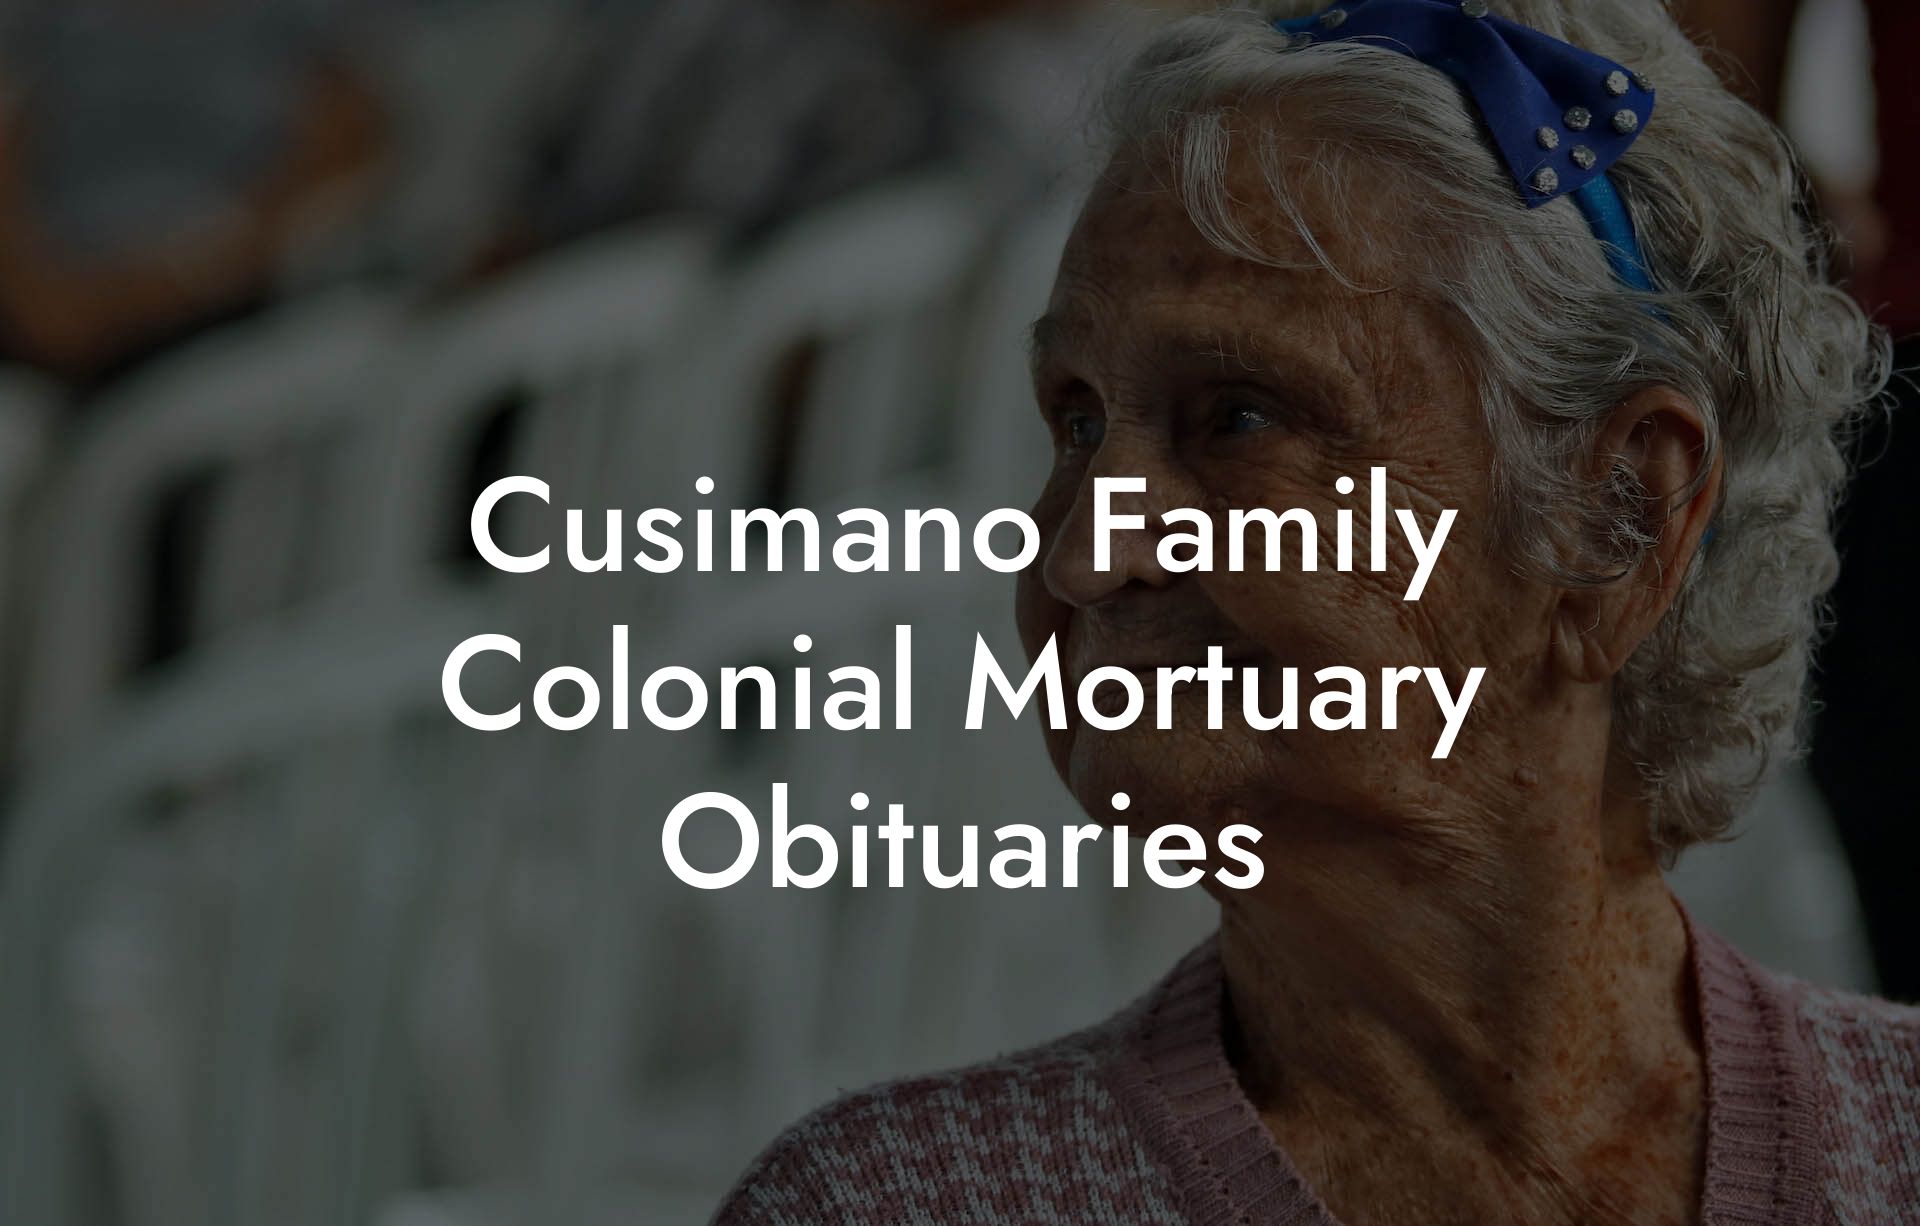 Cusimano Family Colonial Mortuary Obituaries